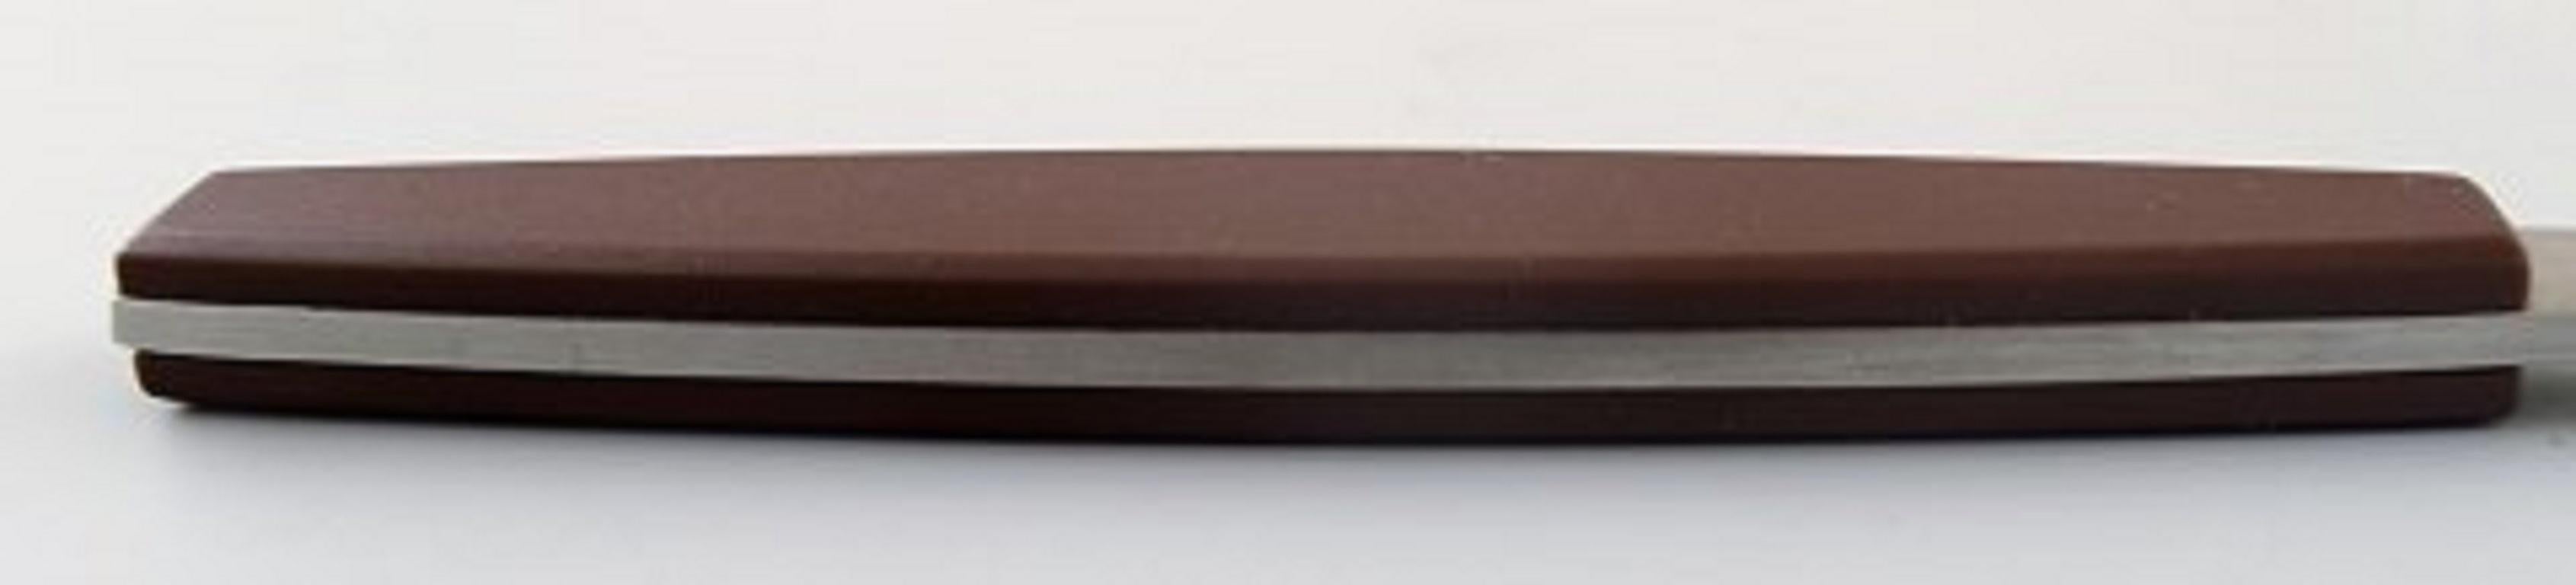 Scandinavian Modern Stainless Steel Strata, Henning Koppel Cutlery, Brown Plastic For Sale